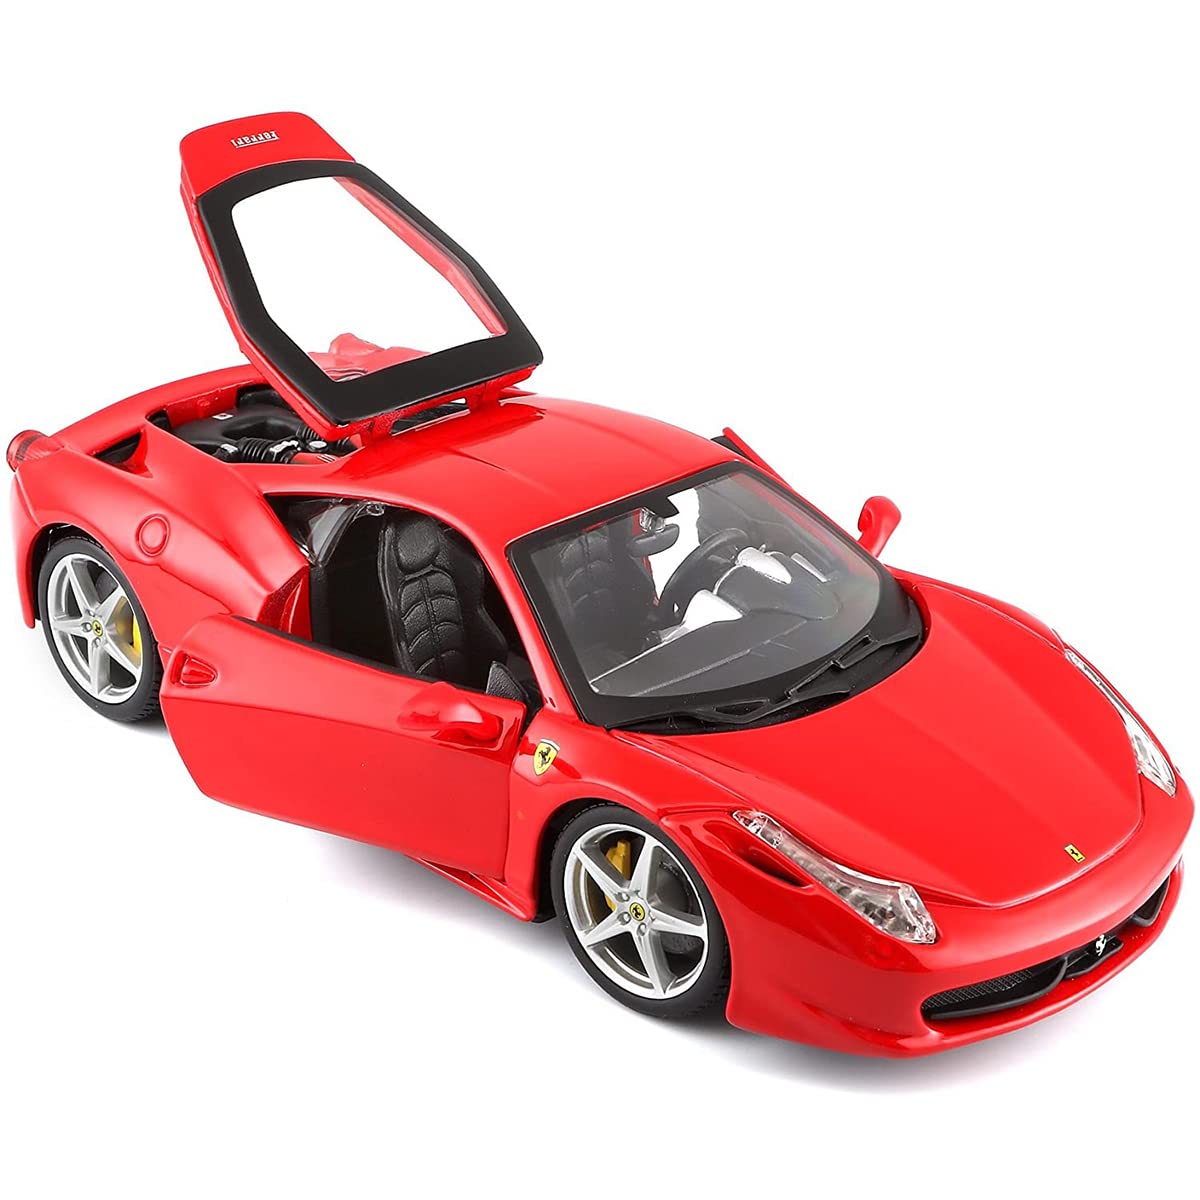 Bburago - 26003r - Véhicule Miniature - Modèle À L'échelle - Ferrari 458 Italia - 2009 - Echelle 1/2